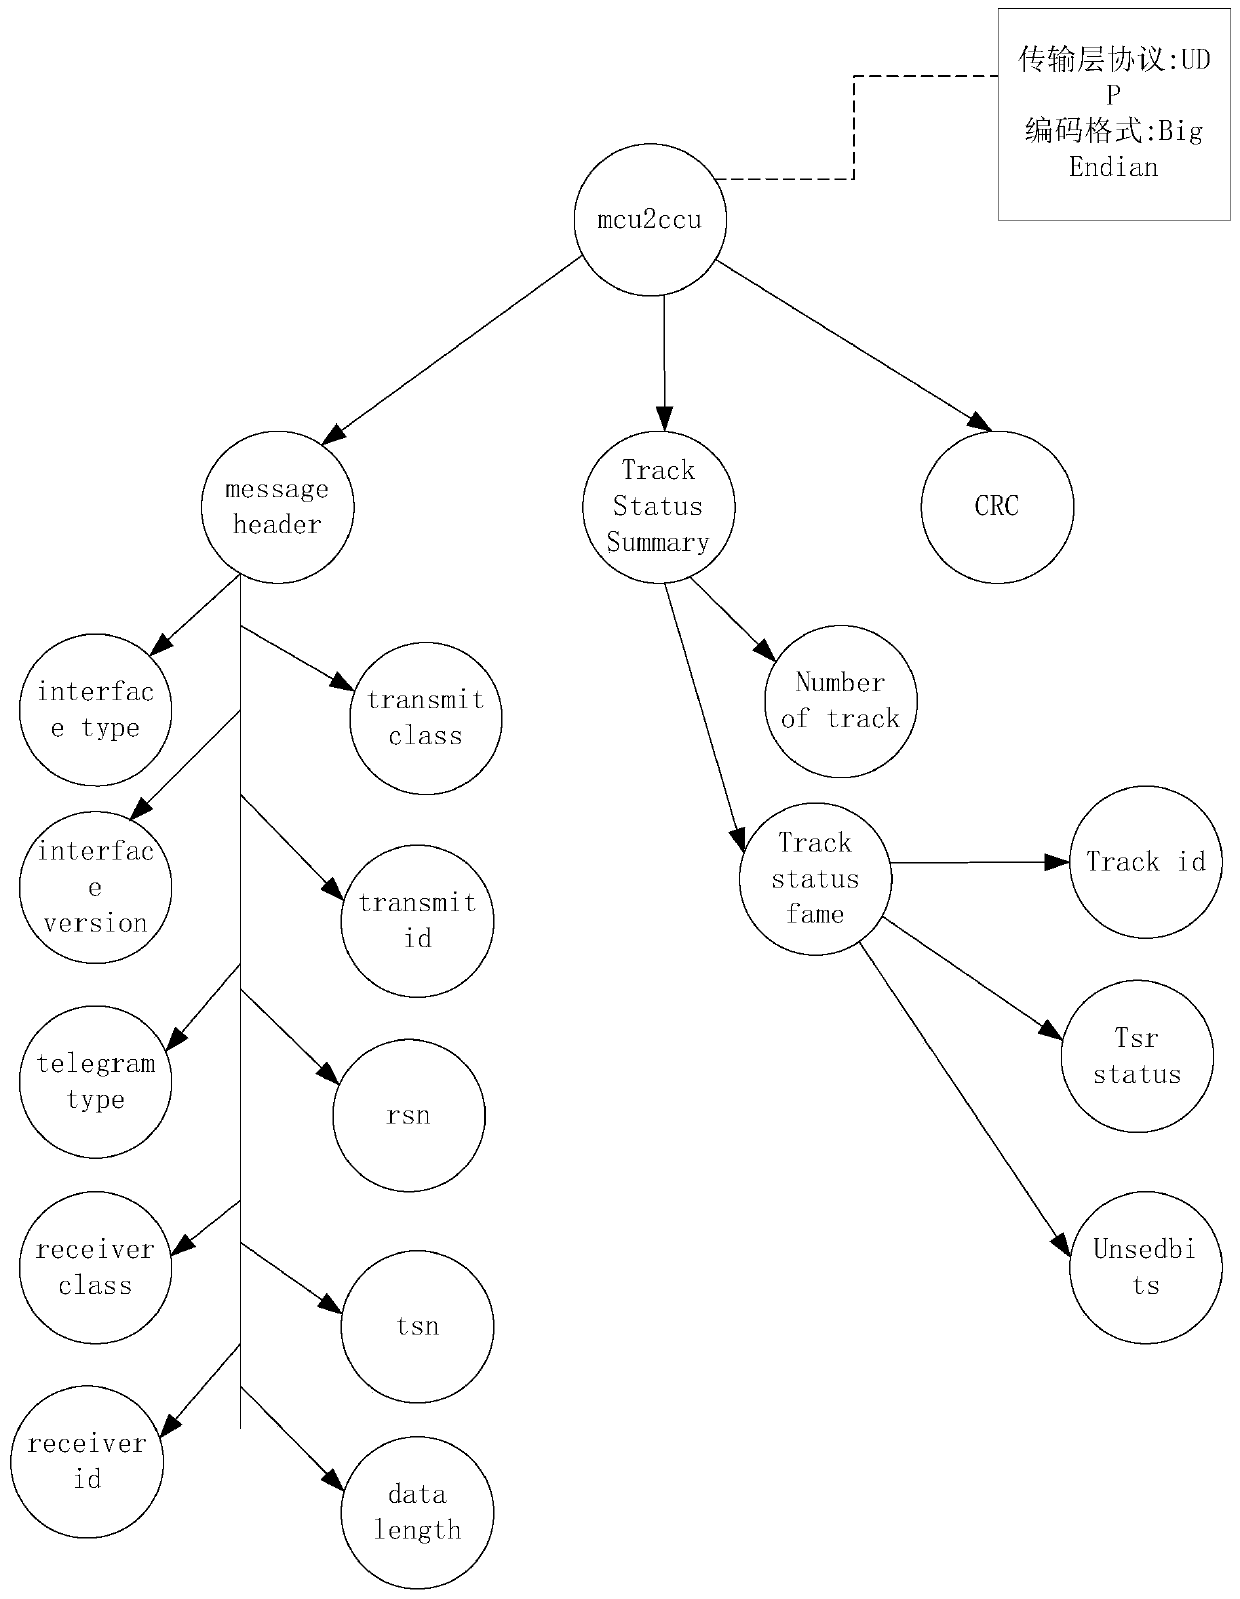 XML-based protocol analysis method for Wireshark